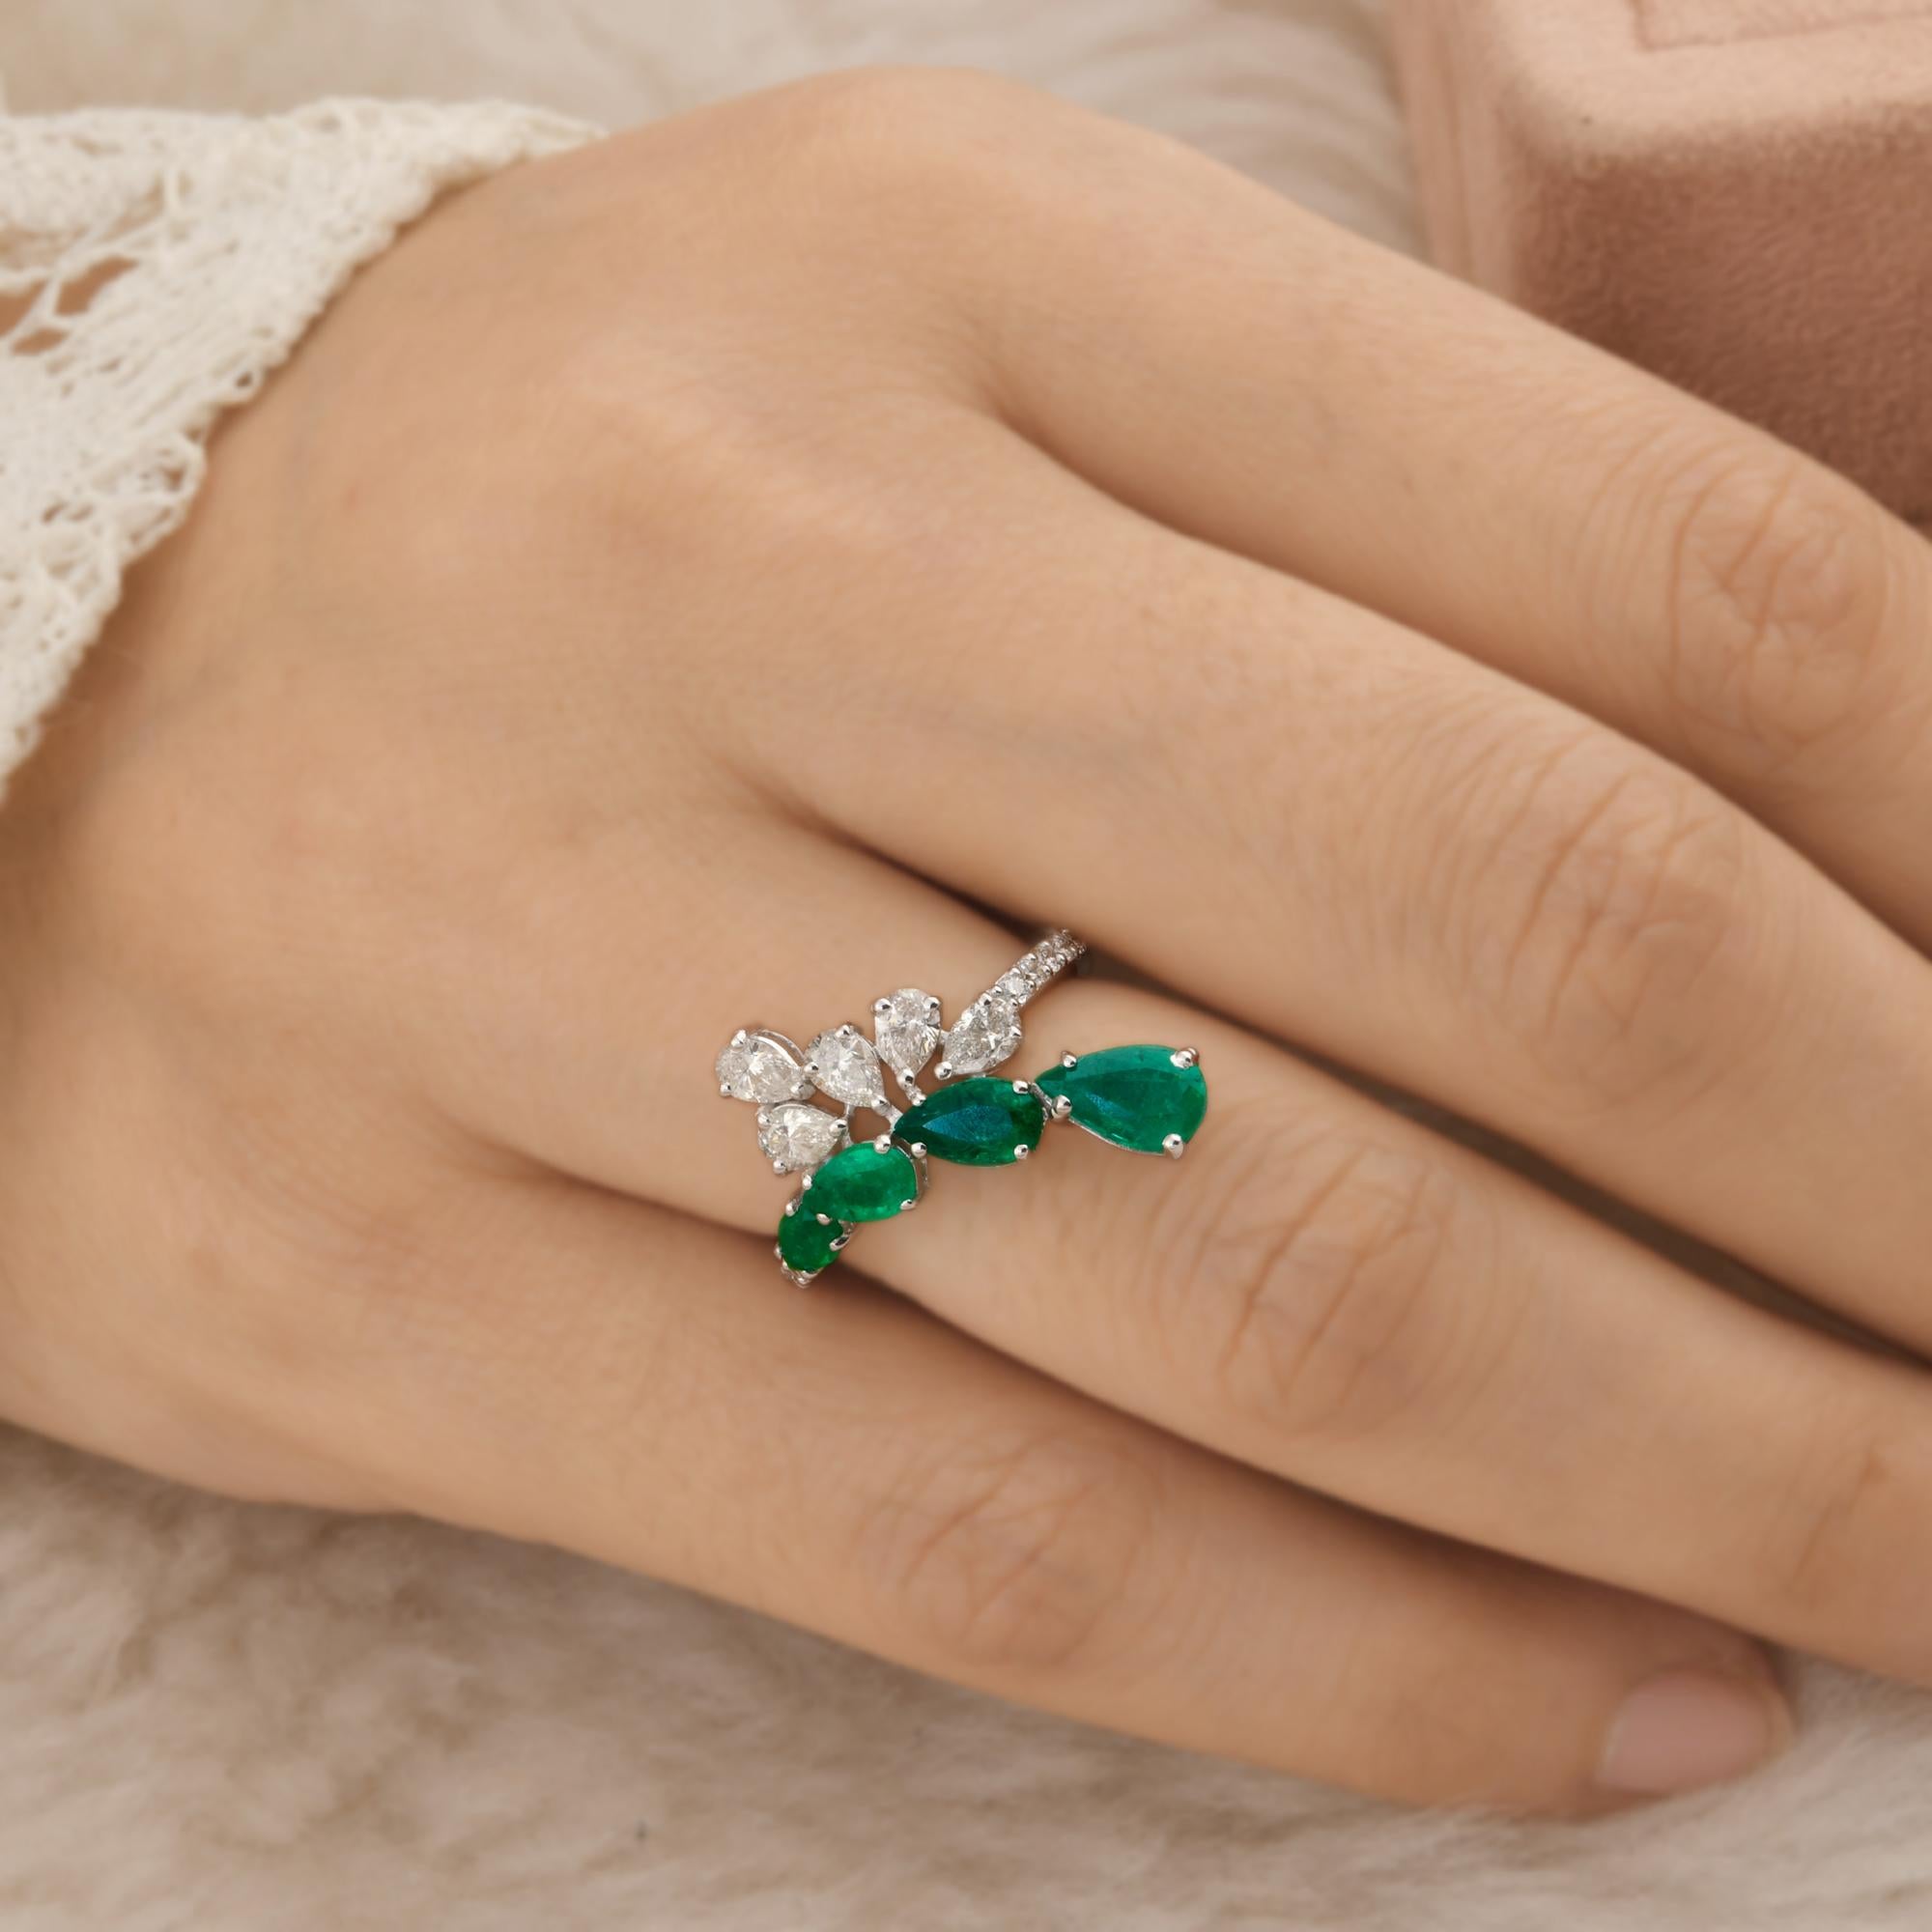 Women's Natural Pear Emerald Gemstone Ring Diamond 14k White Gold Fine Handmade Jewelry For Sale